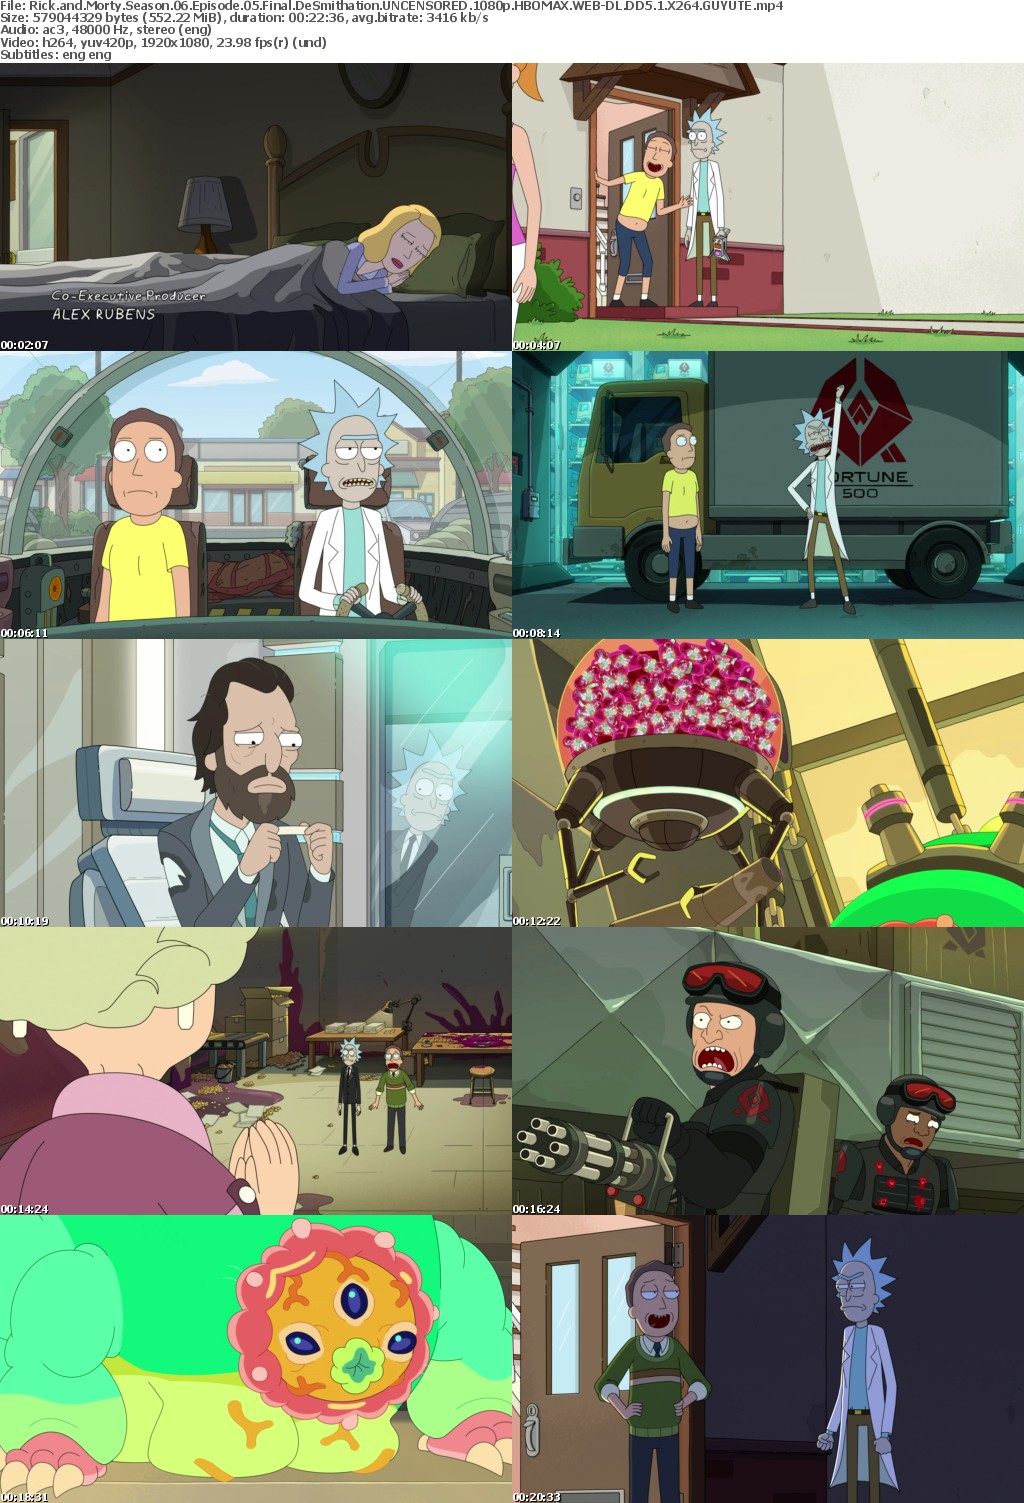 Rick and Morty Season 06 UNCENSORED 1080p HBOMAX WEB-DL DD5 1 X264 GUYUTE